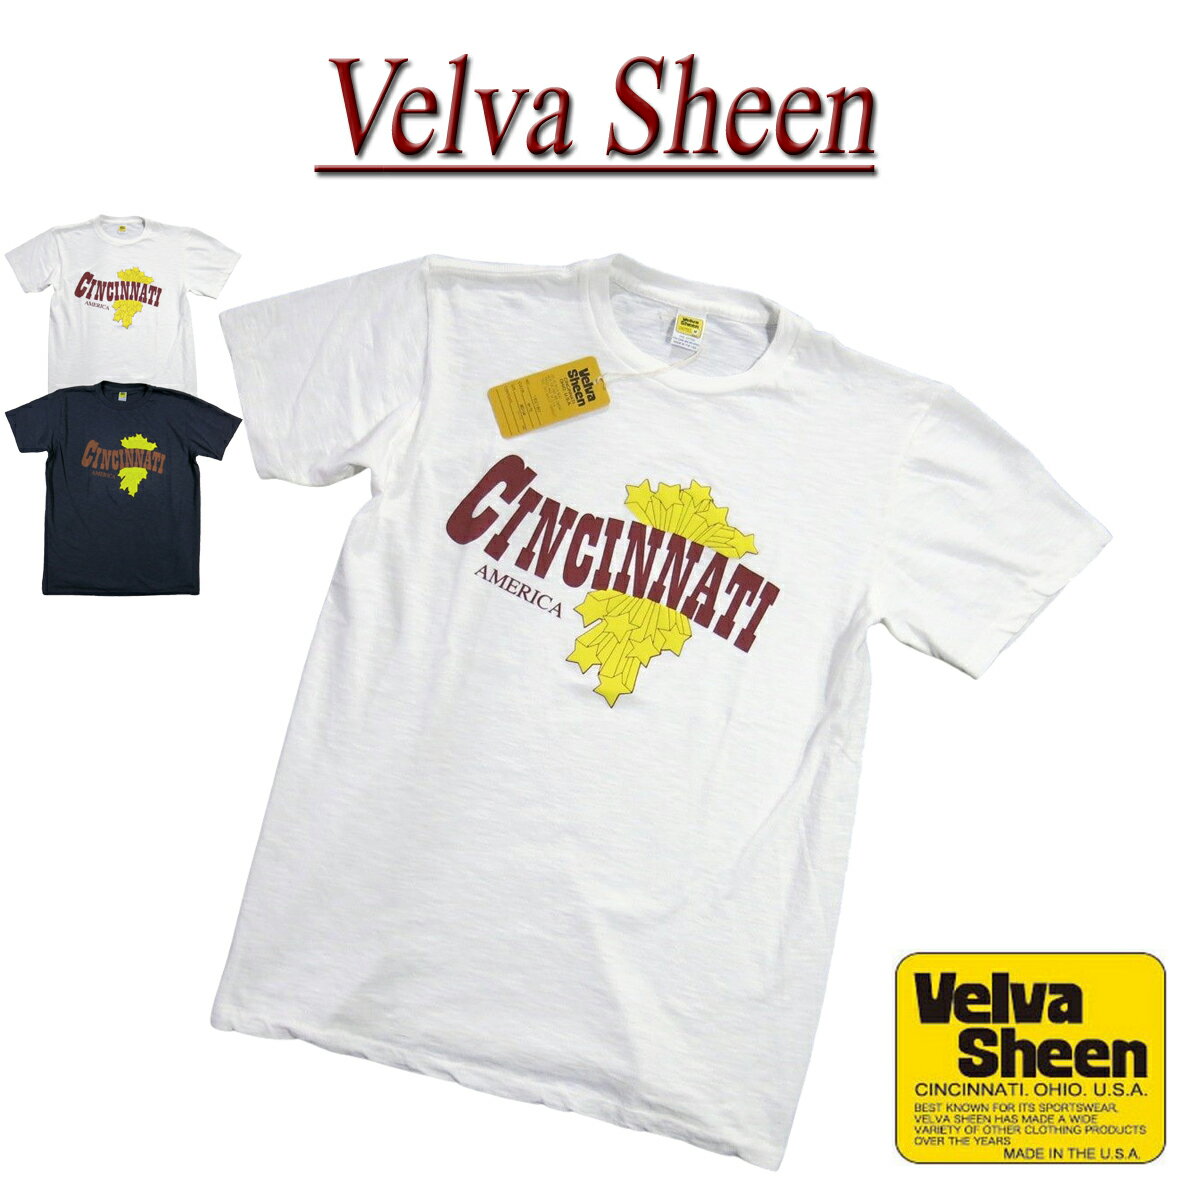  je281 新品 Velva Sheen USA製 CINCINNATI AMERICA TEE 半袖 スラブ Tシャツ 162180 メンズ ベルバシーン ティーシャツ イエローレーベル Made in USA 